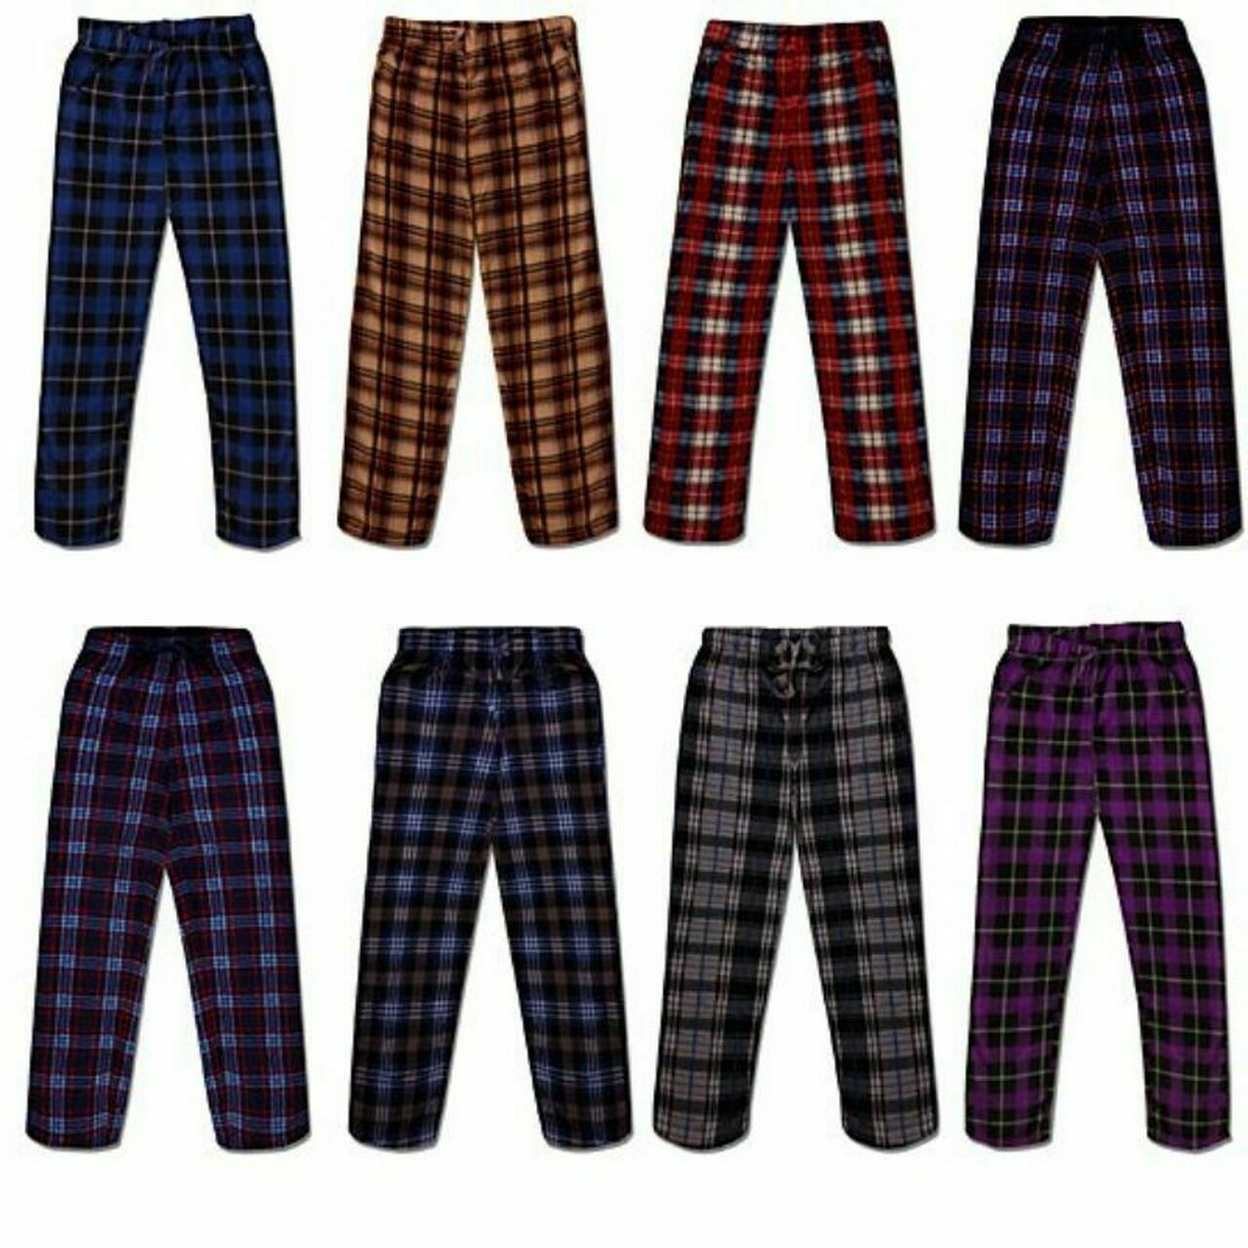 2-Pack: Men's Ultra Soft Cozy Flannel Fleece Plaid Pajama Sleep Bottom Lounge Pants - Black & Grey, Medium